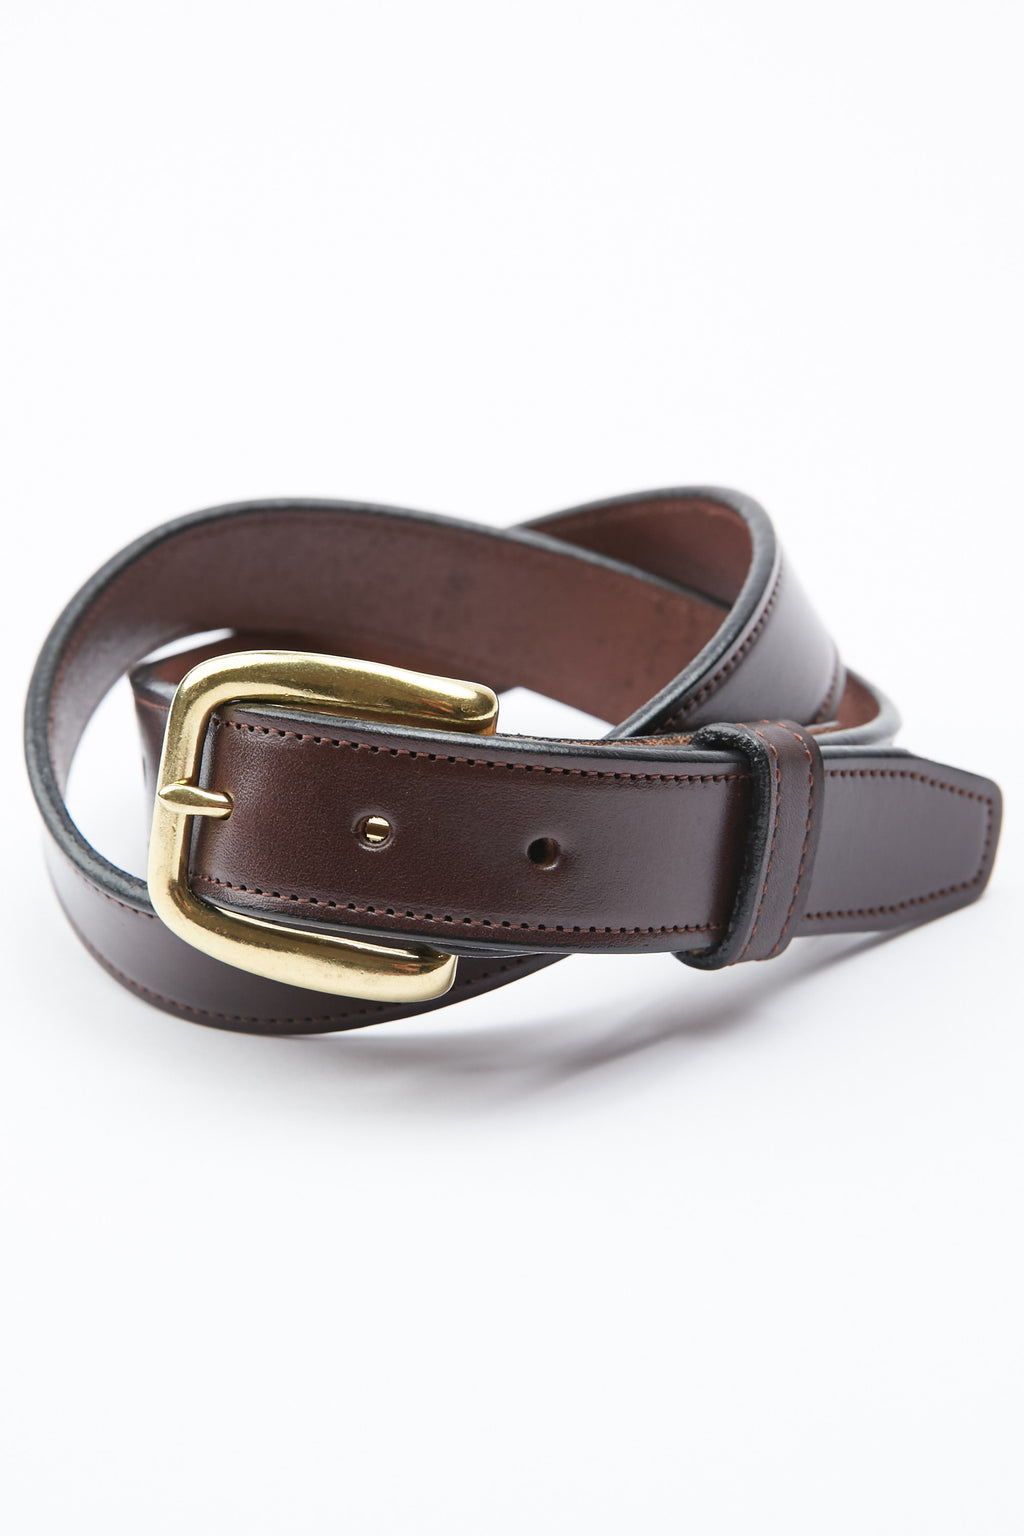 Tory Leather Stitched Belt - Havana (2259)